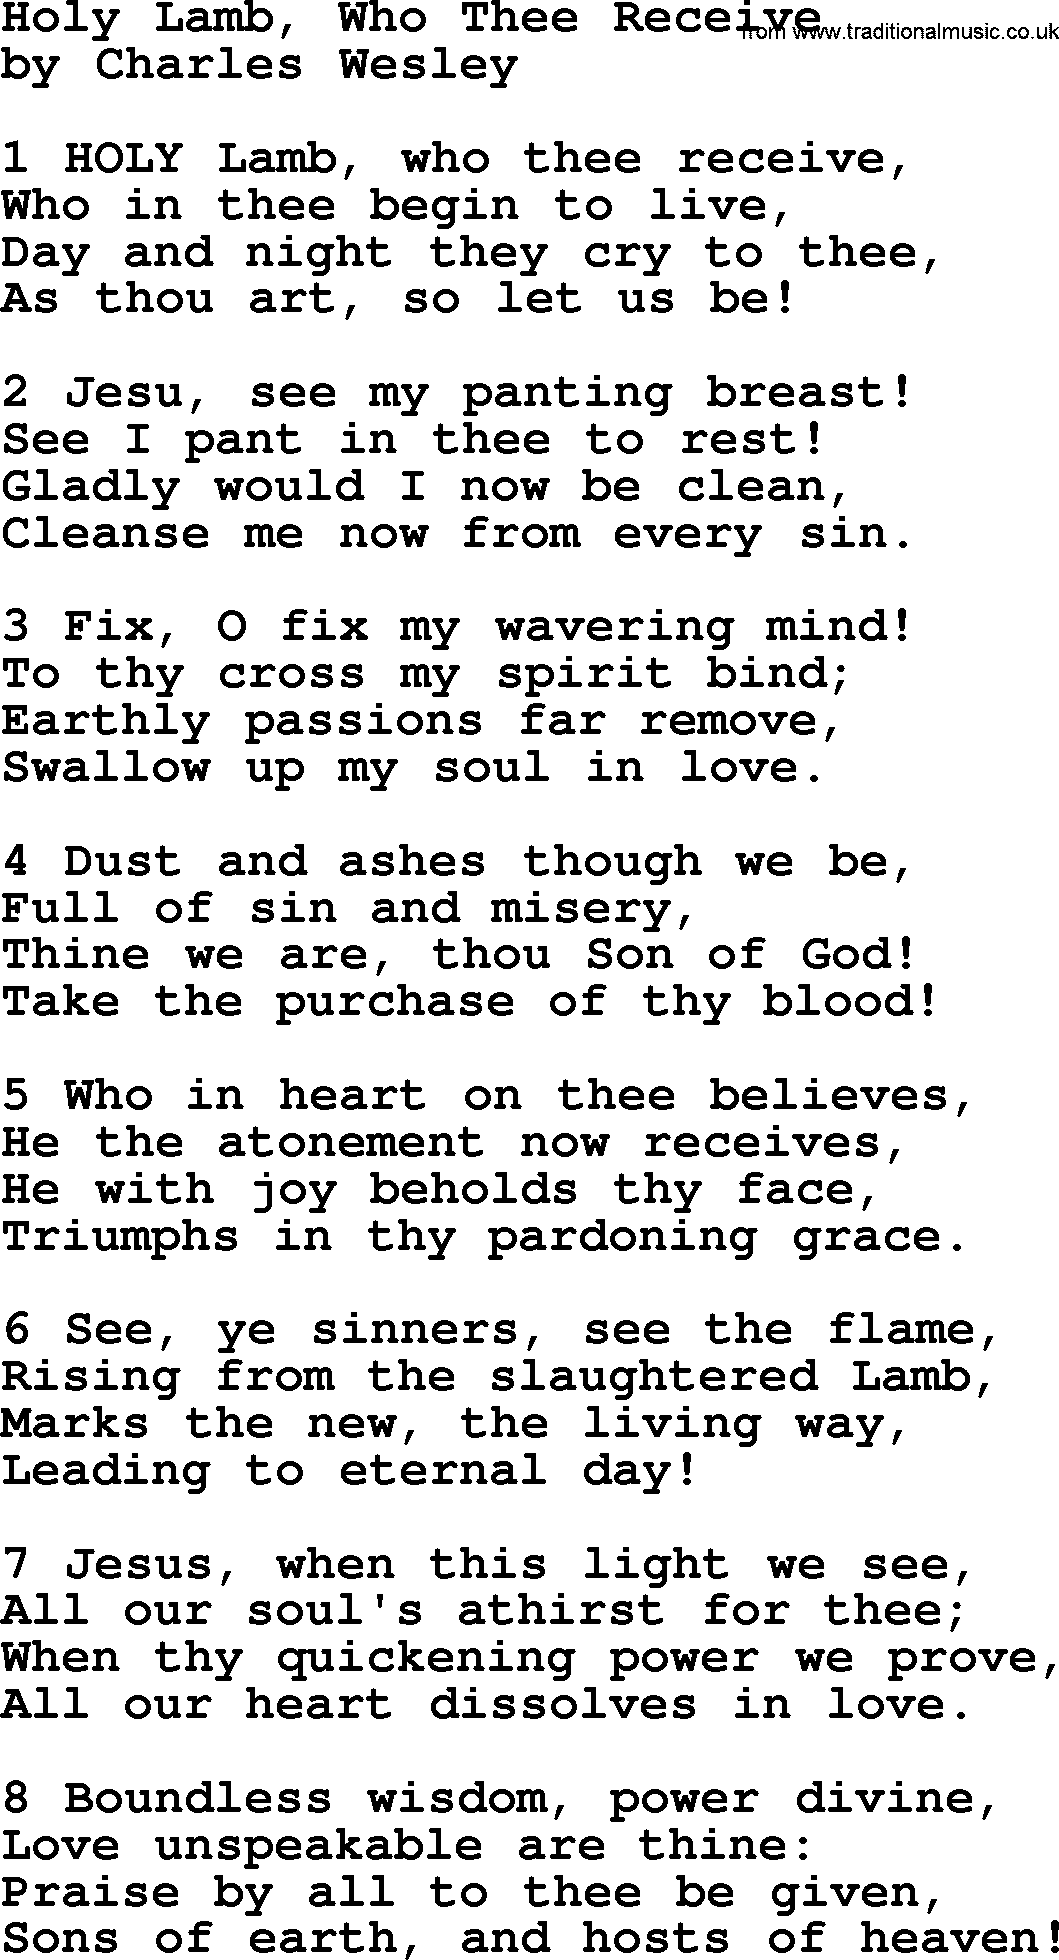 Charles Wesley hymn: Holy Lamb, Who Thee Receive, lyrics